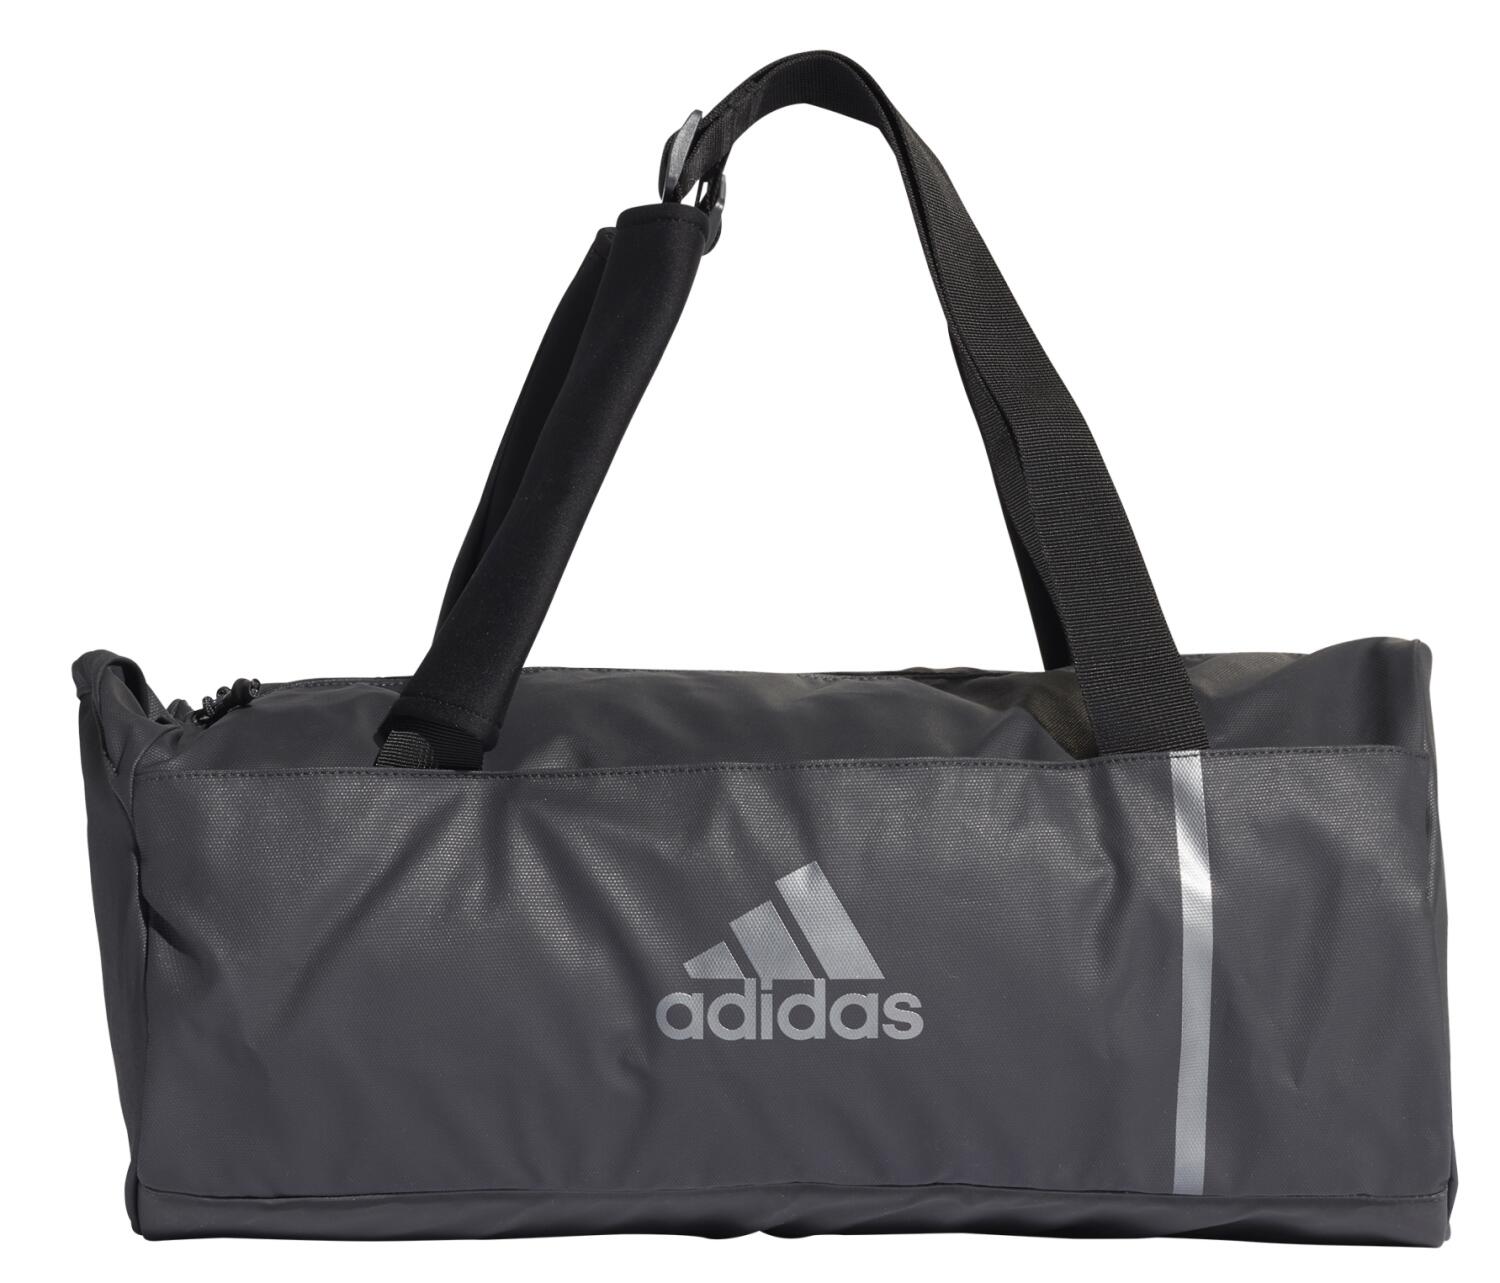 adidas Convertible Training Duffelbag S Tasche (carbon/night metallic/night metallic) von Adidas